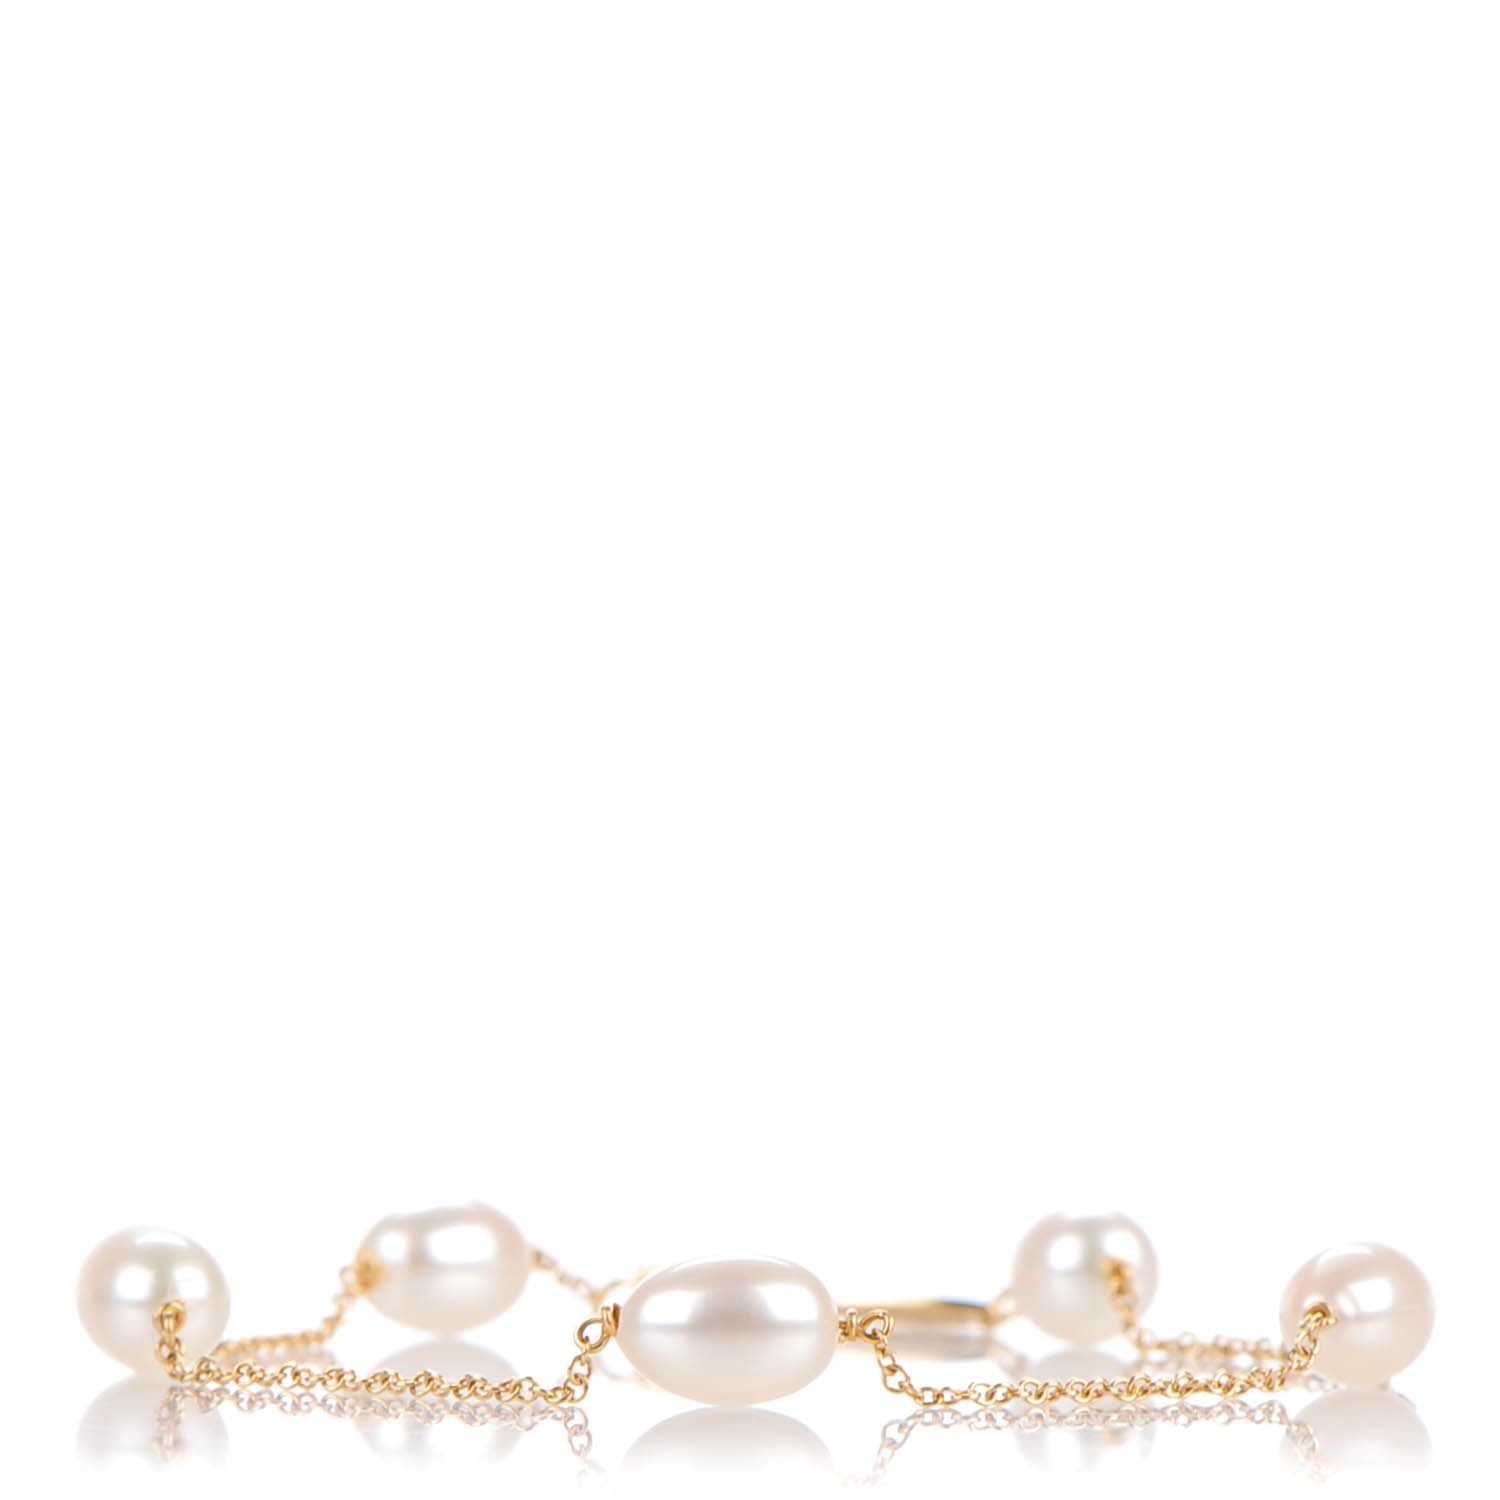 tiffany pearls by the yard bracelet